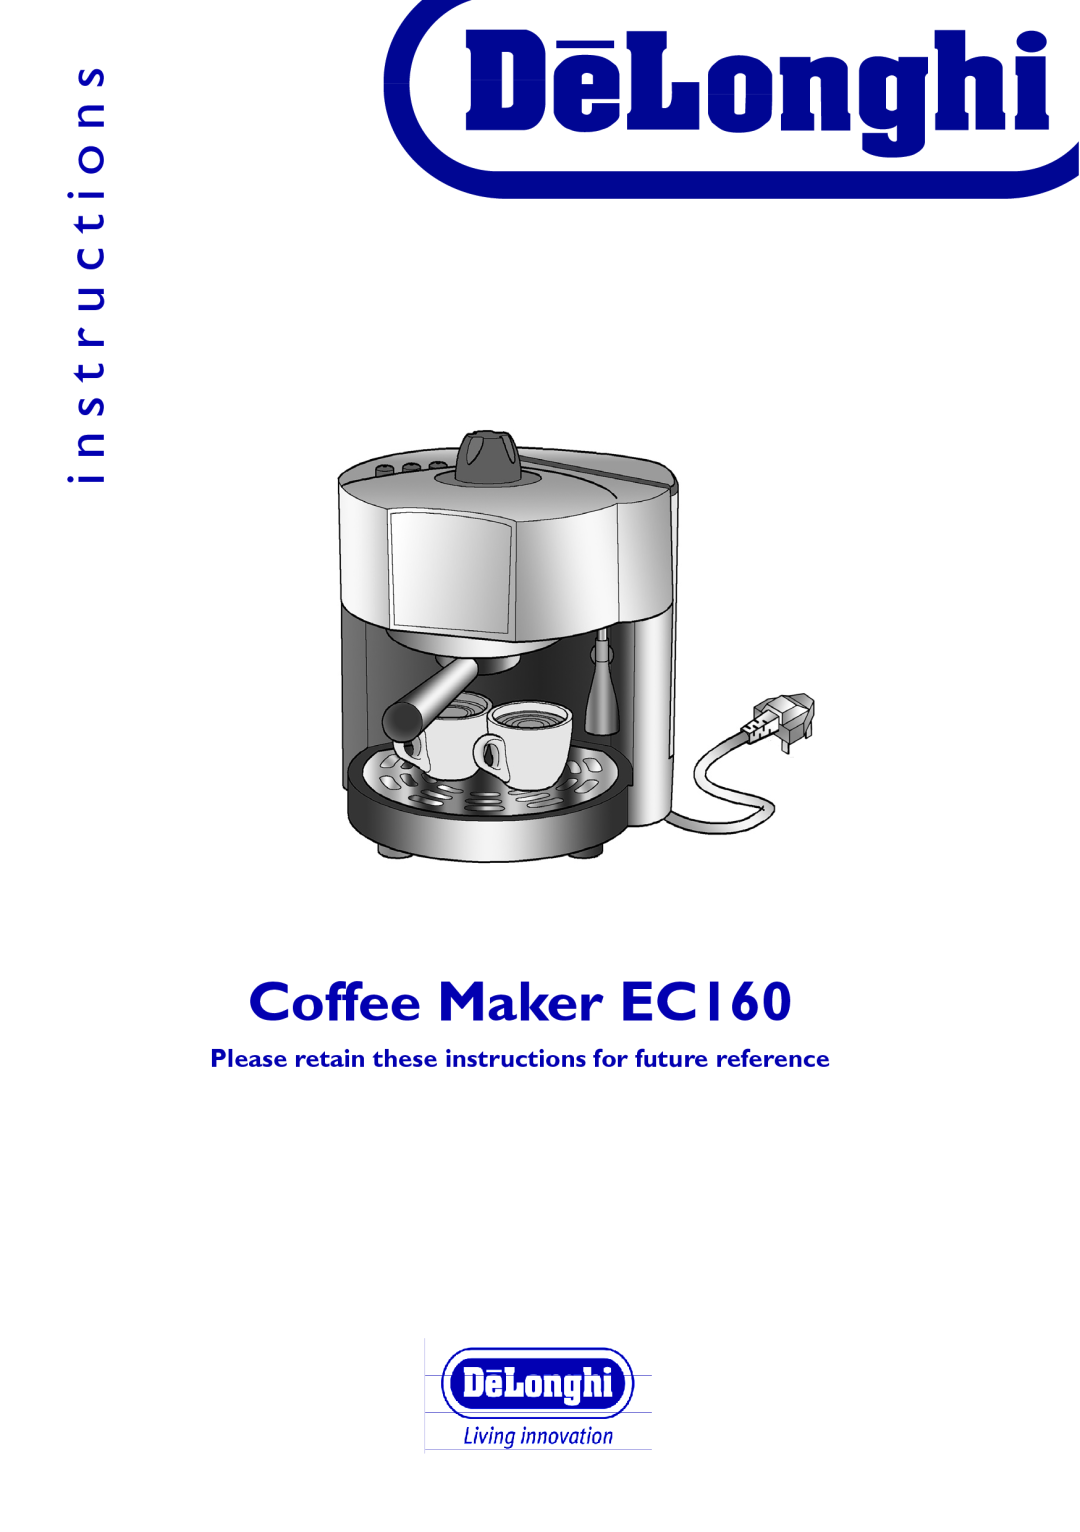 DeLonghi manual Please retain these instructions for future reference, i n s t r u c t i o n s, Coffee Maker EC160 